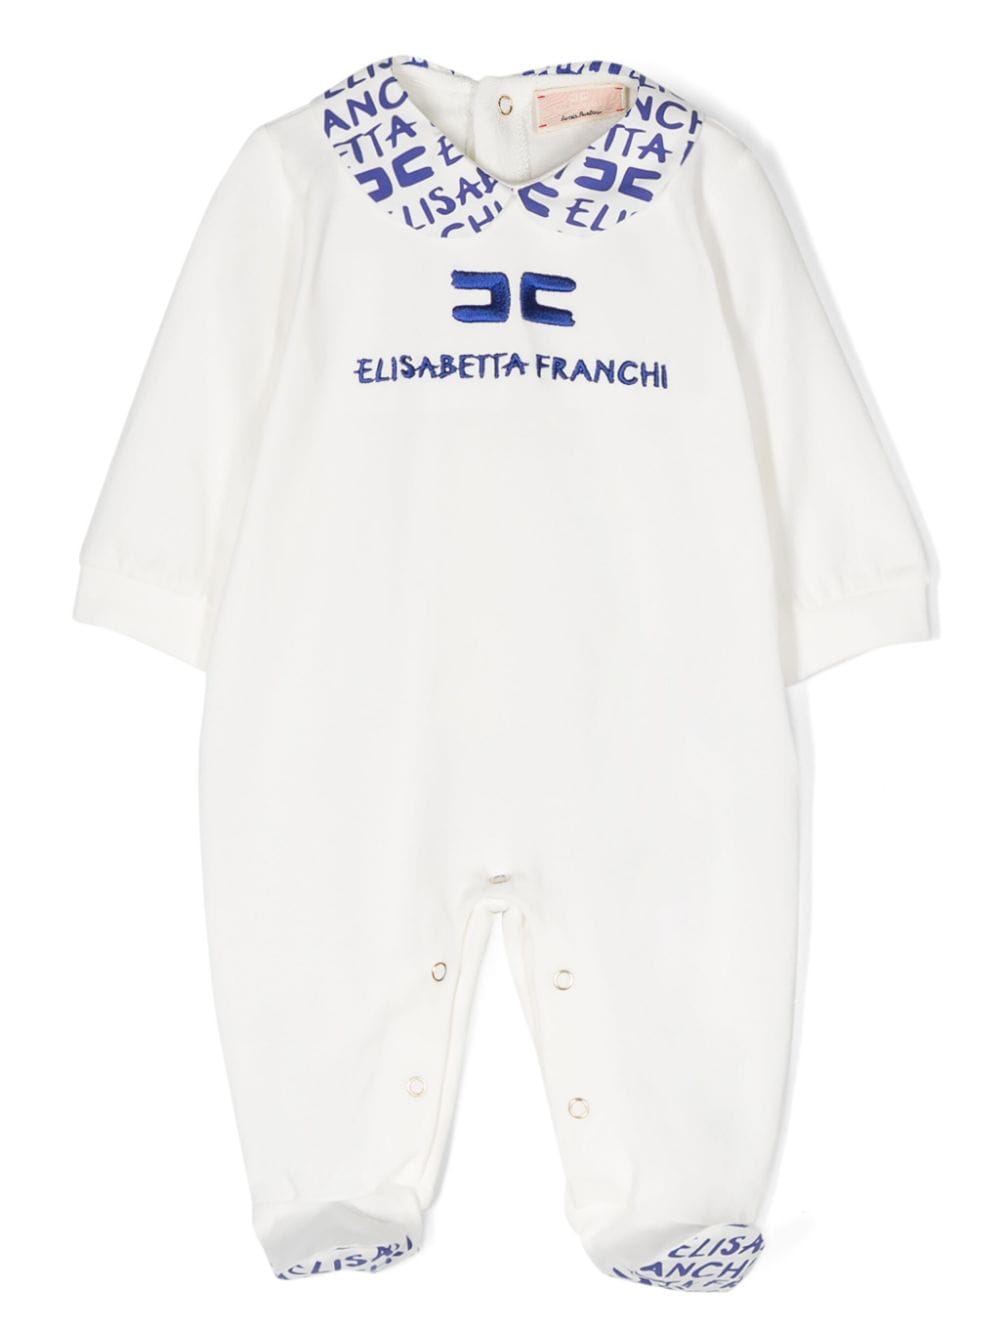 White baby girl onesie with blue logo